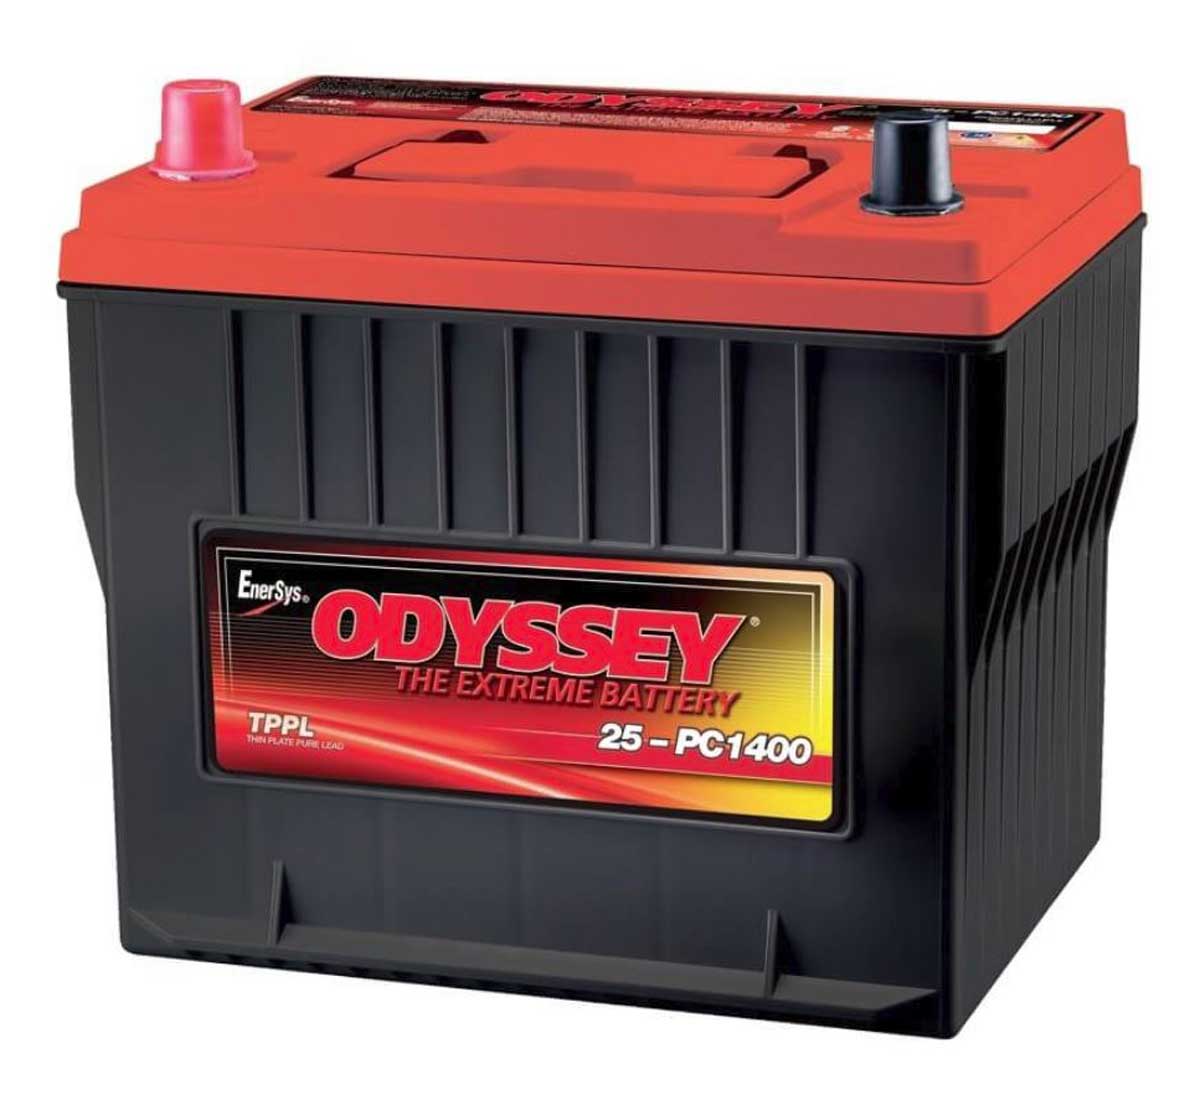 Odyssey PC1400-25 Extreme Battery